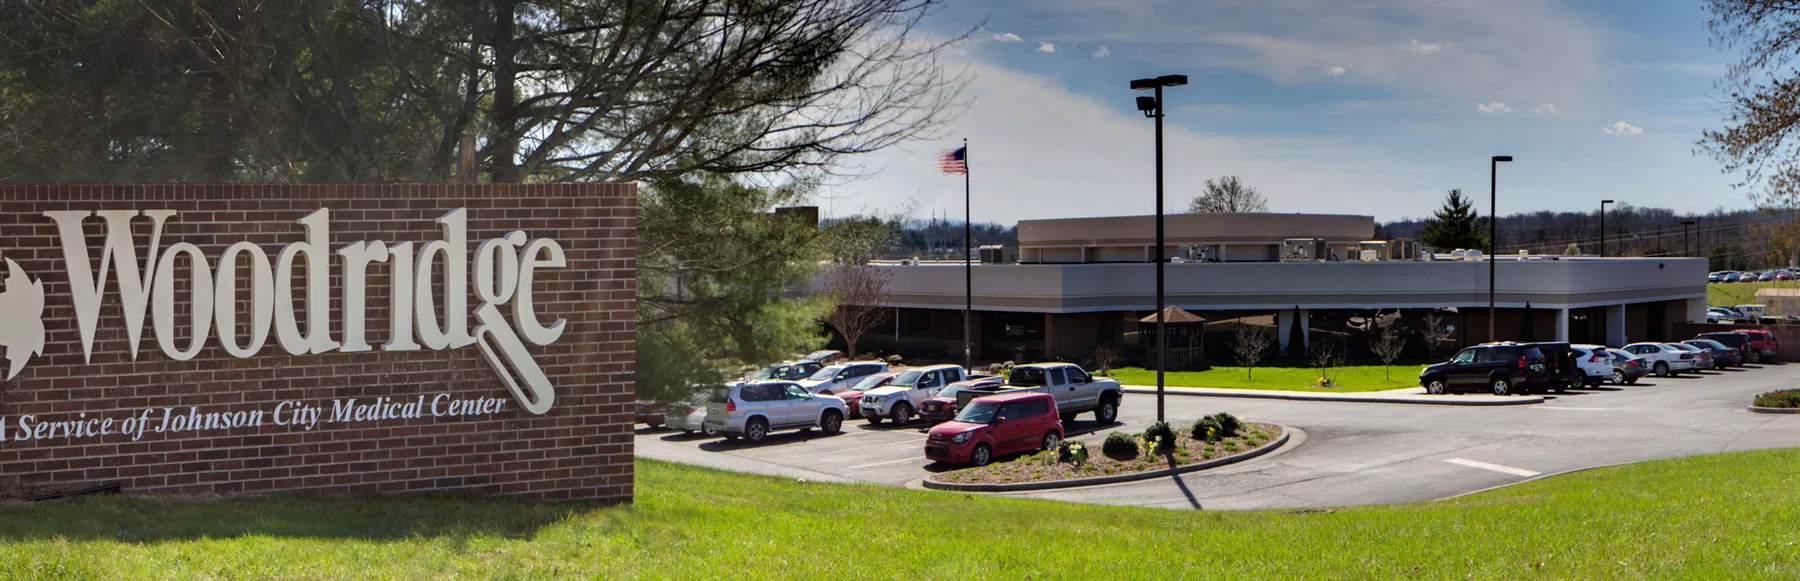 Facility exterior of Woodridge psychiatric hospital in Johnson City, Tennessee